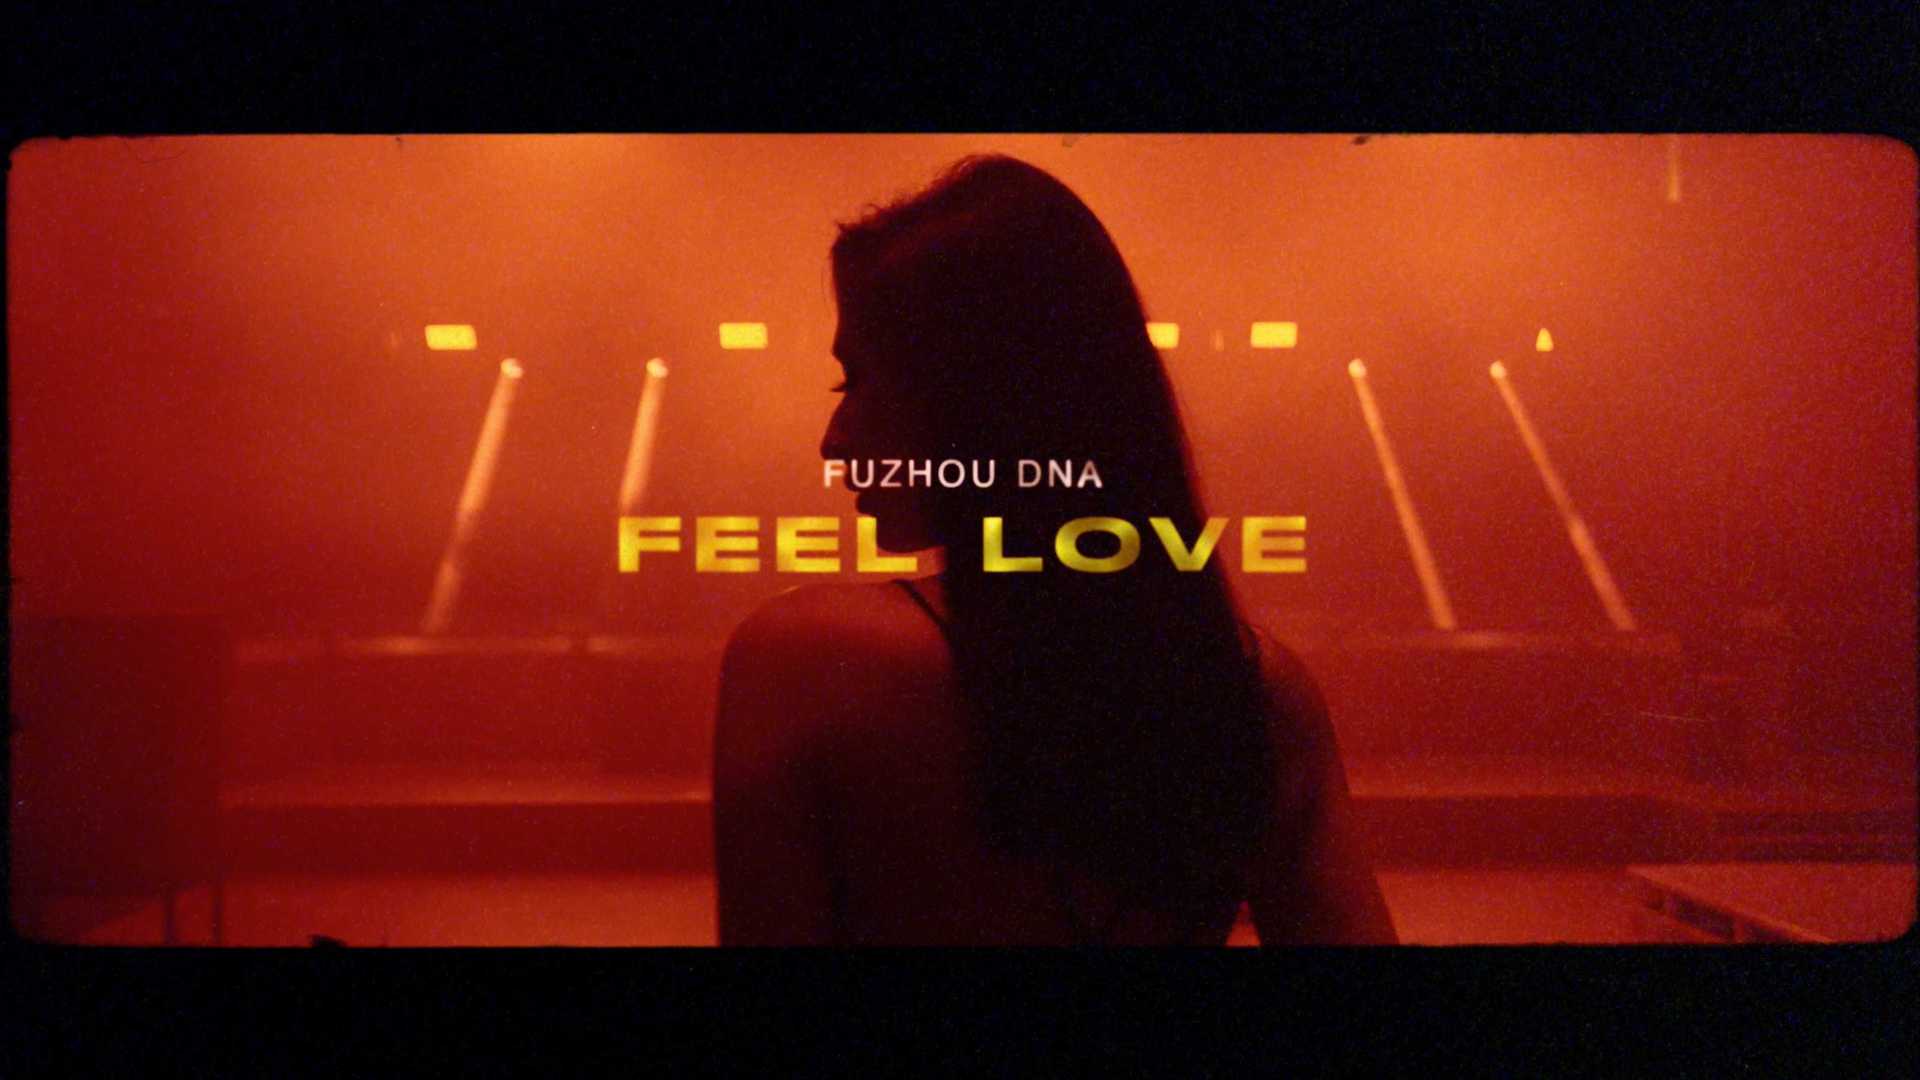 FEEL LOVE - DNA FUZHOU